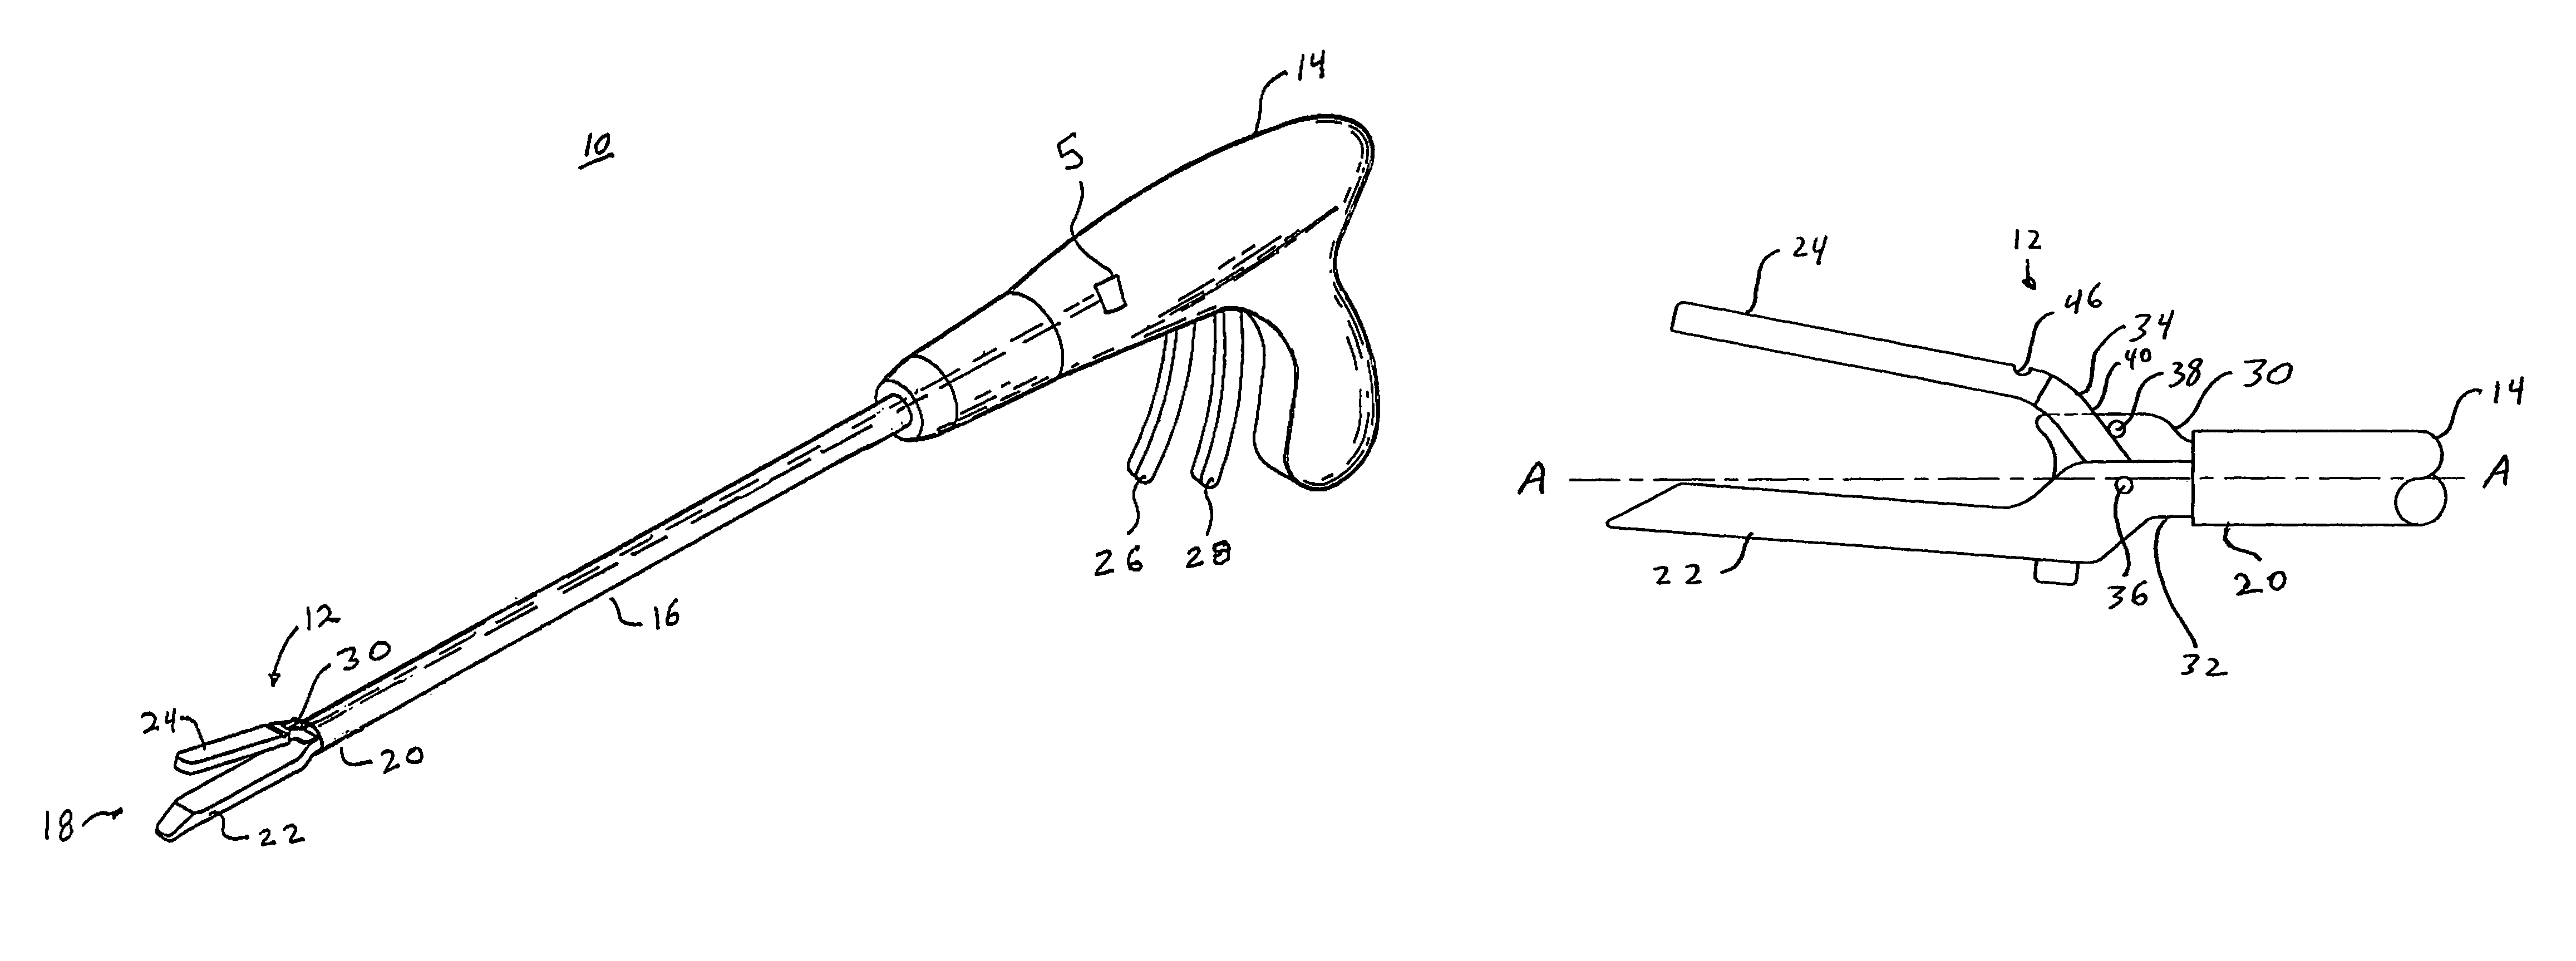 Anvil position detector for a surgical stapler